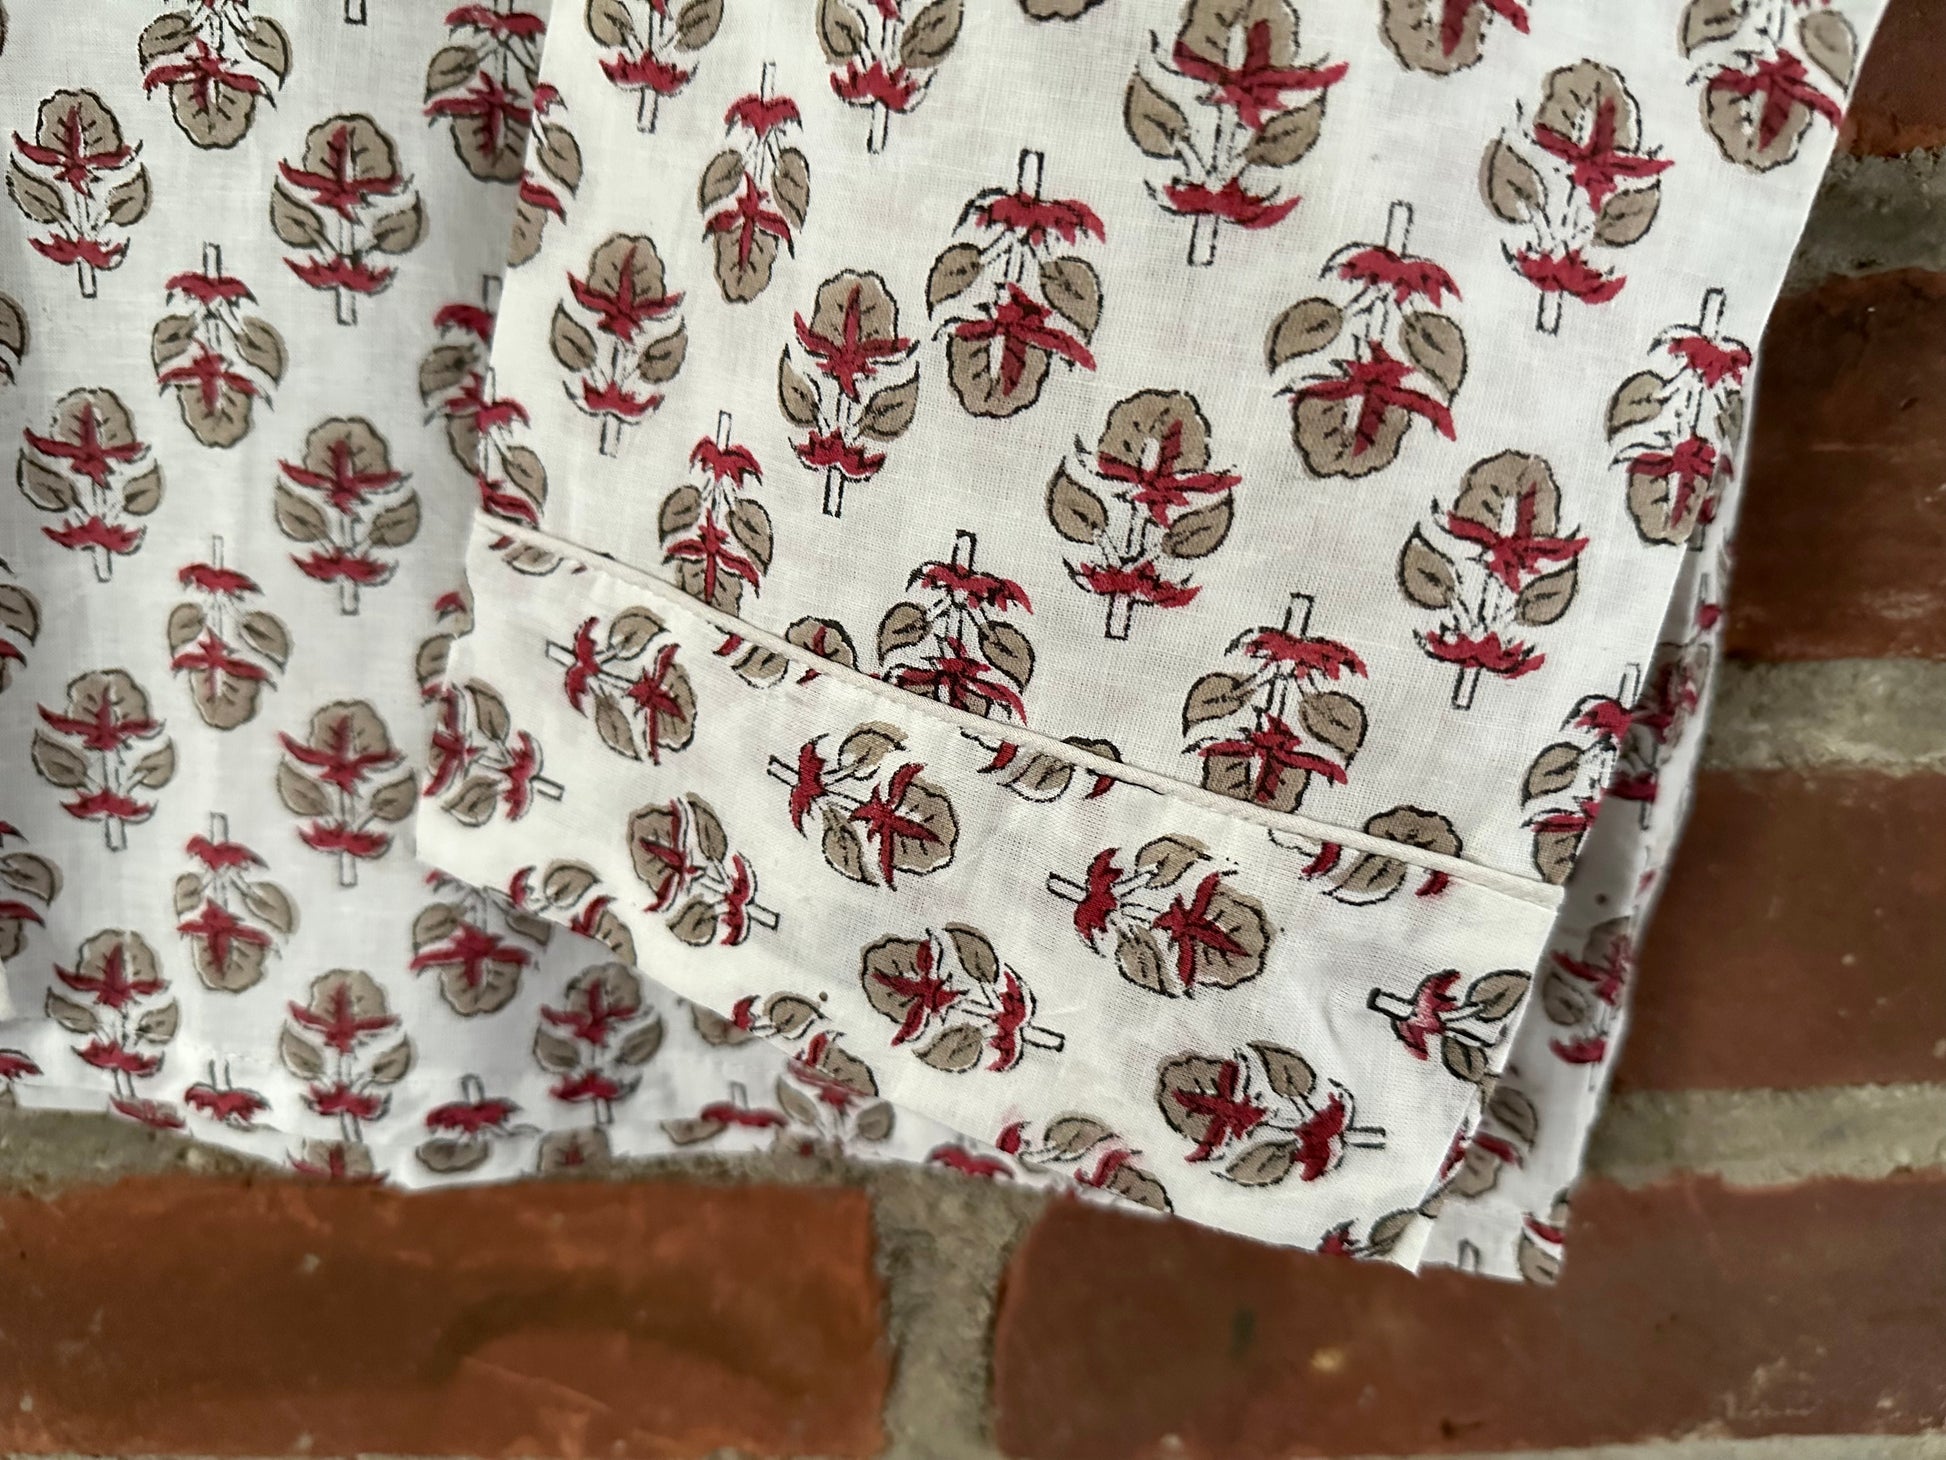 Mughal Floral Motif-Inspired Cotton Pajamas with Block-print Red Flowers - DharBazaar